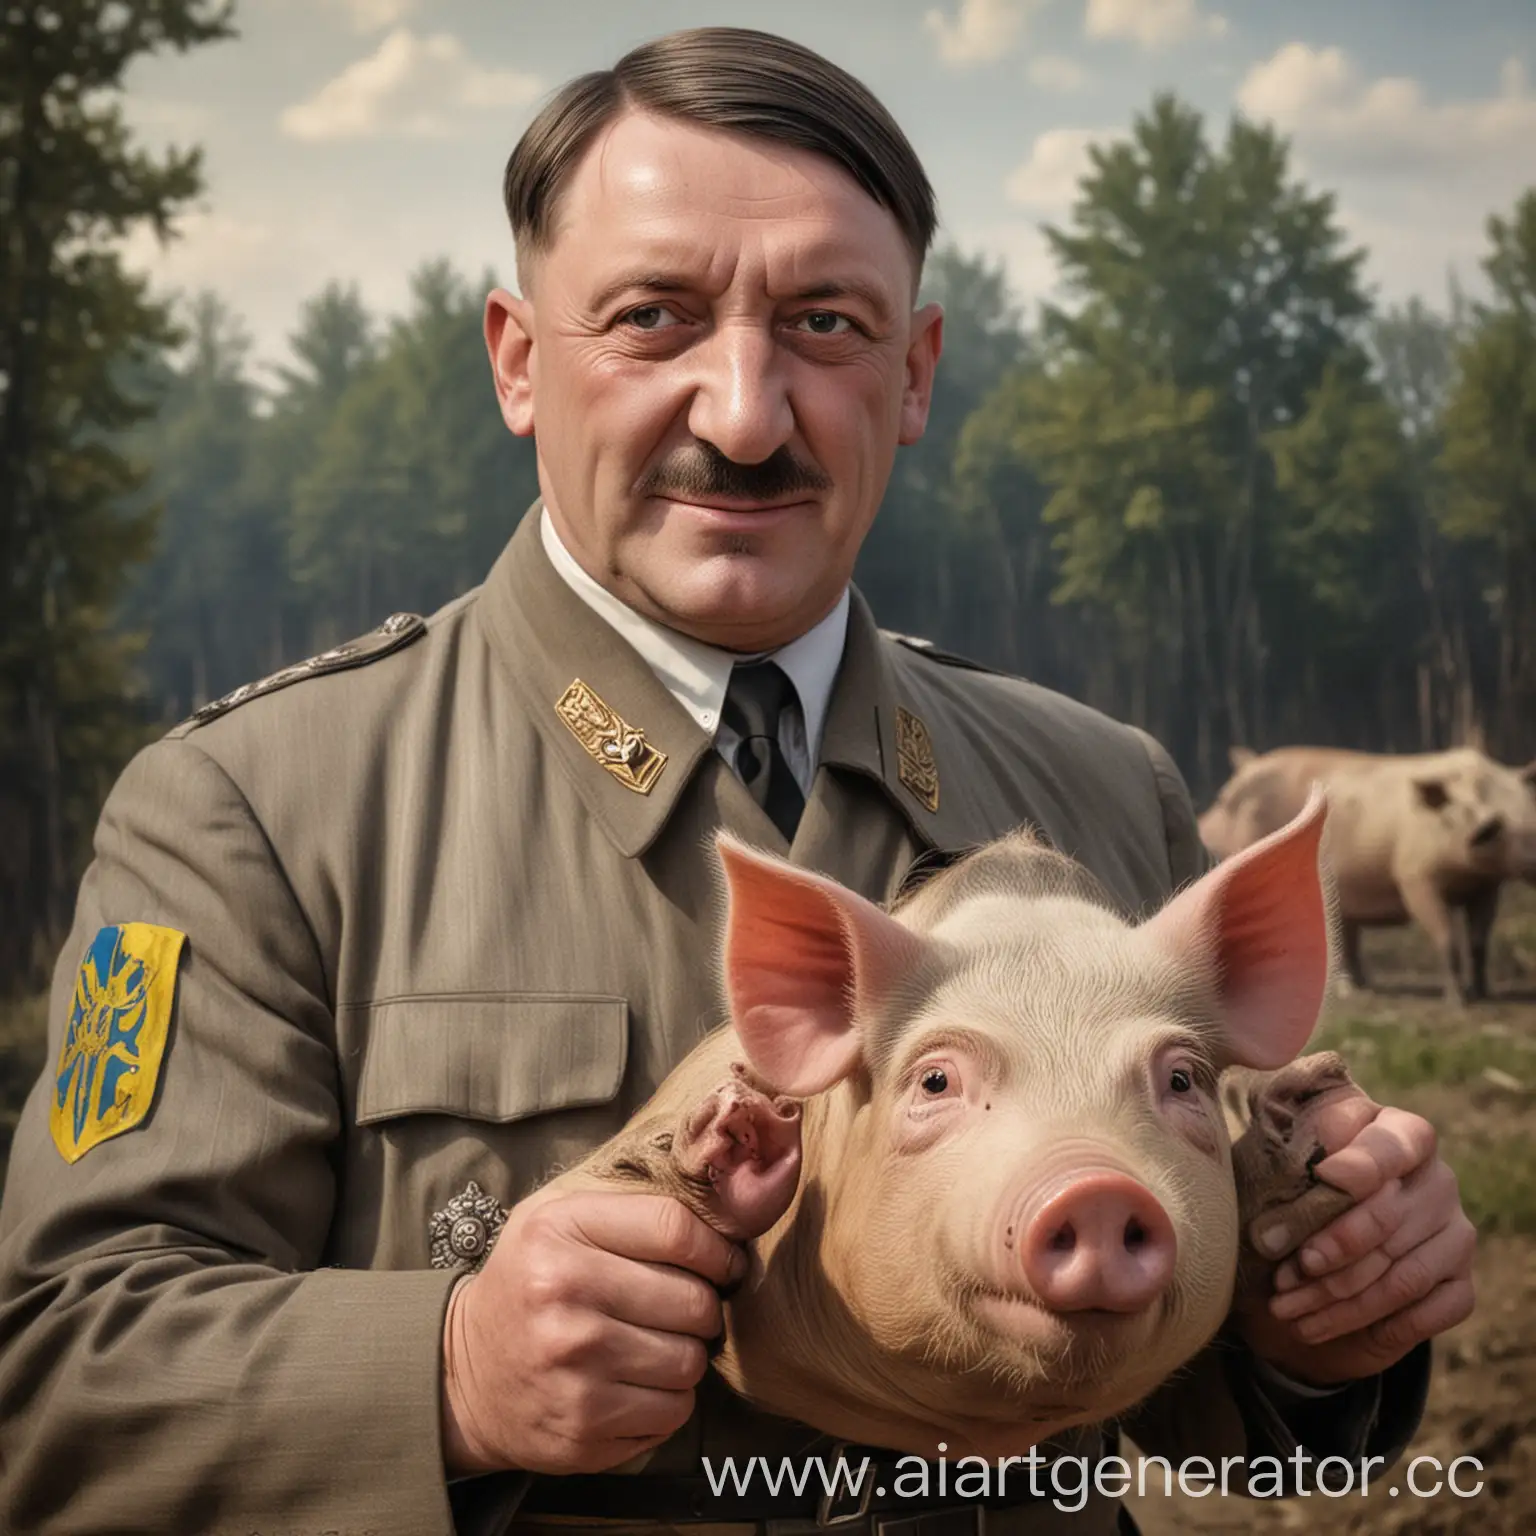 Cheerful-Ukrainian-Man-Holding-Vibrant-Portrait-of-a-Pig